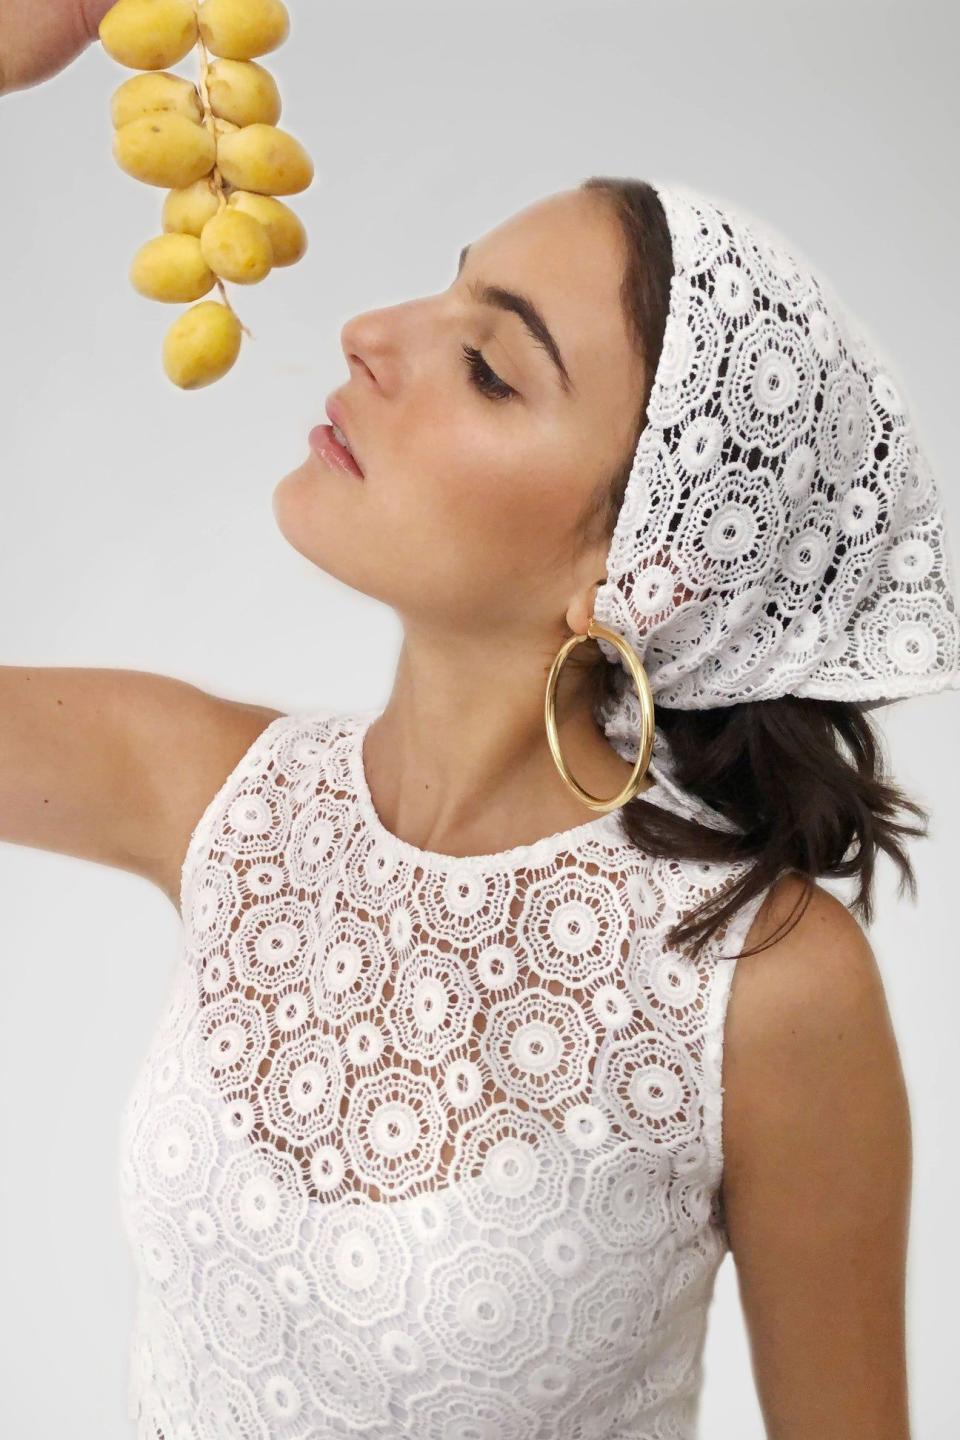 13) Martina Lace Headscarf